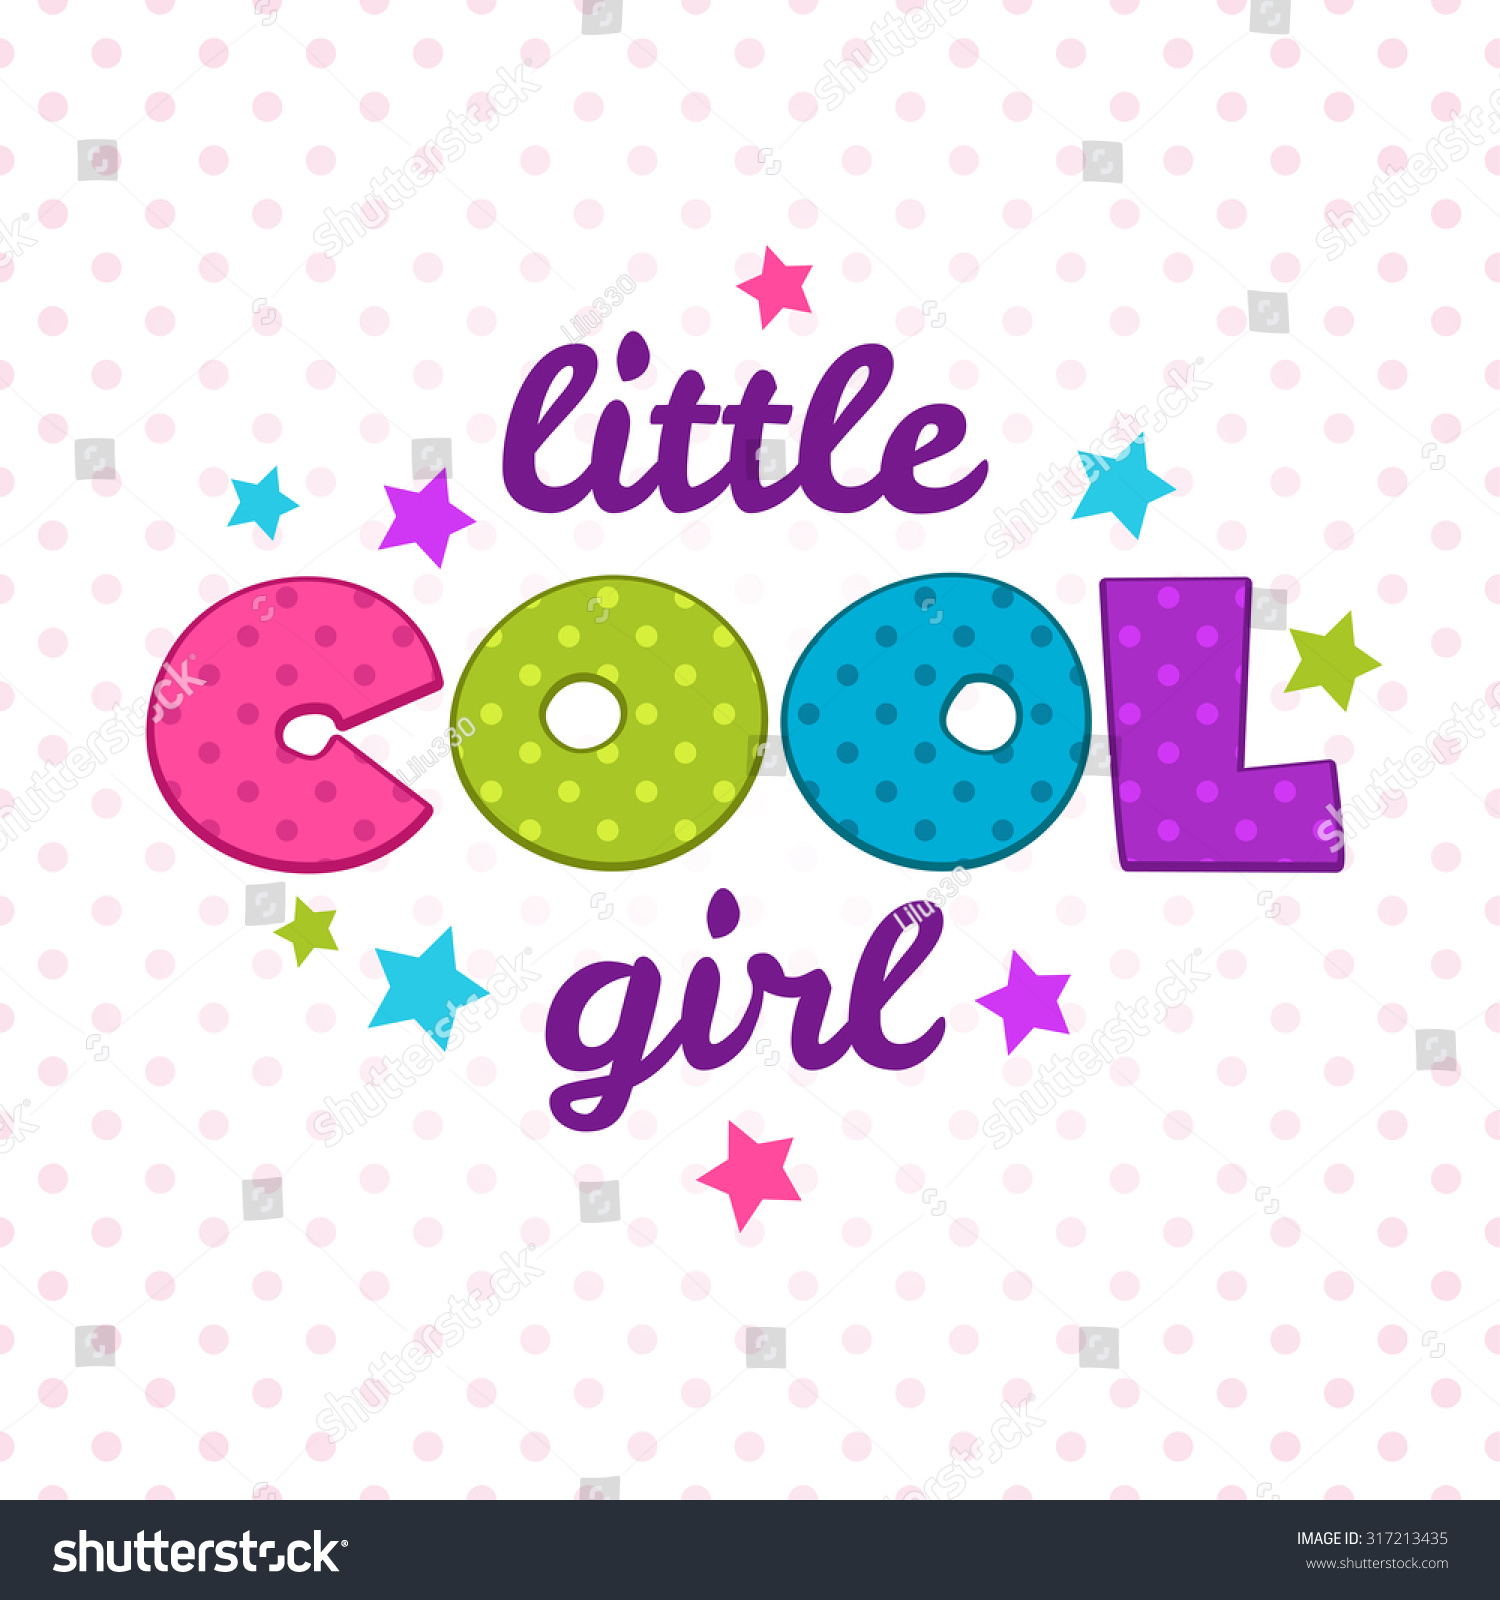 Little Cool Girl Inscription Cute Vector: стоковая векторная графика (без л...